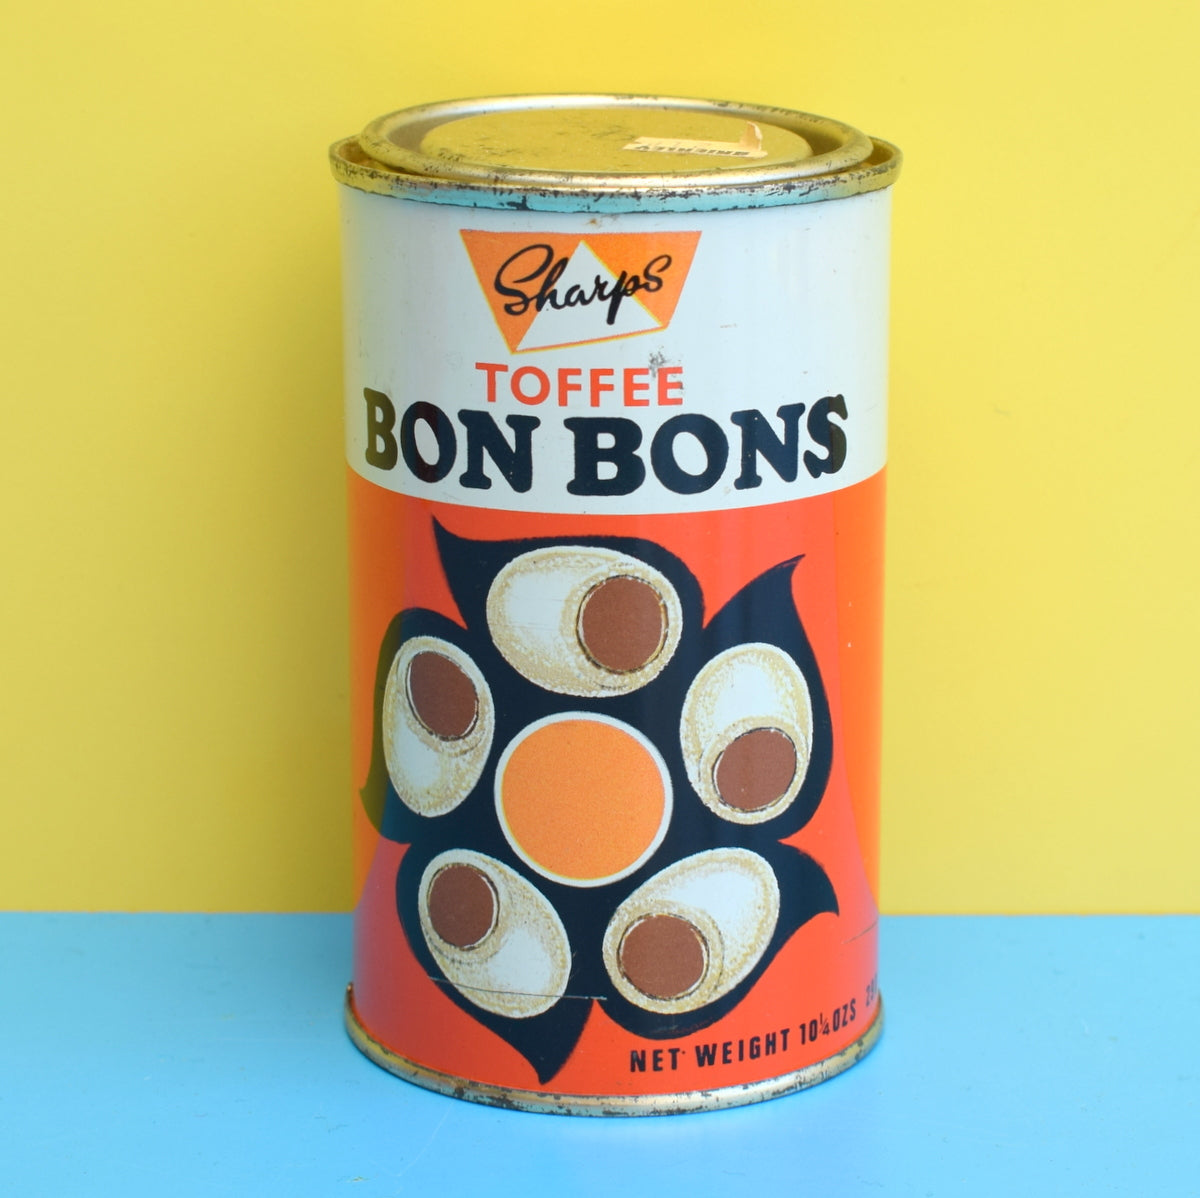 Vintage 1970s Toffee Bon Bon Tin - Sharps